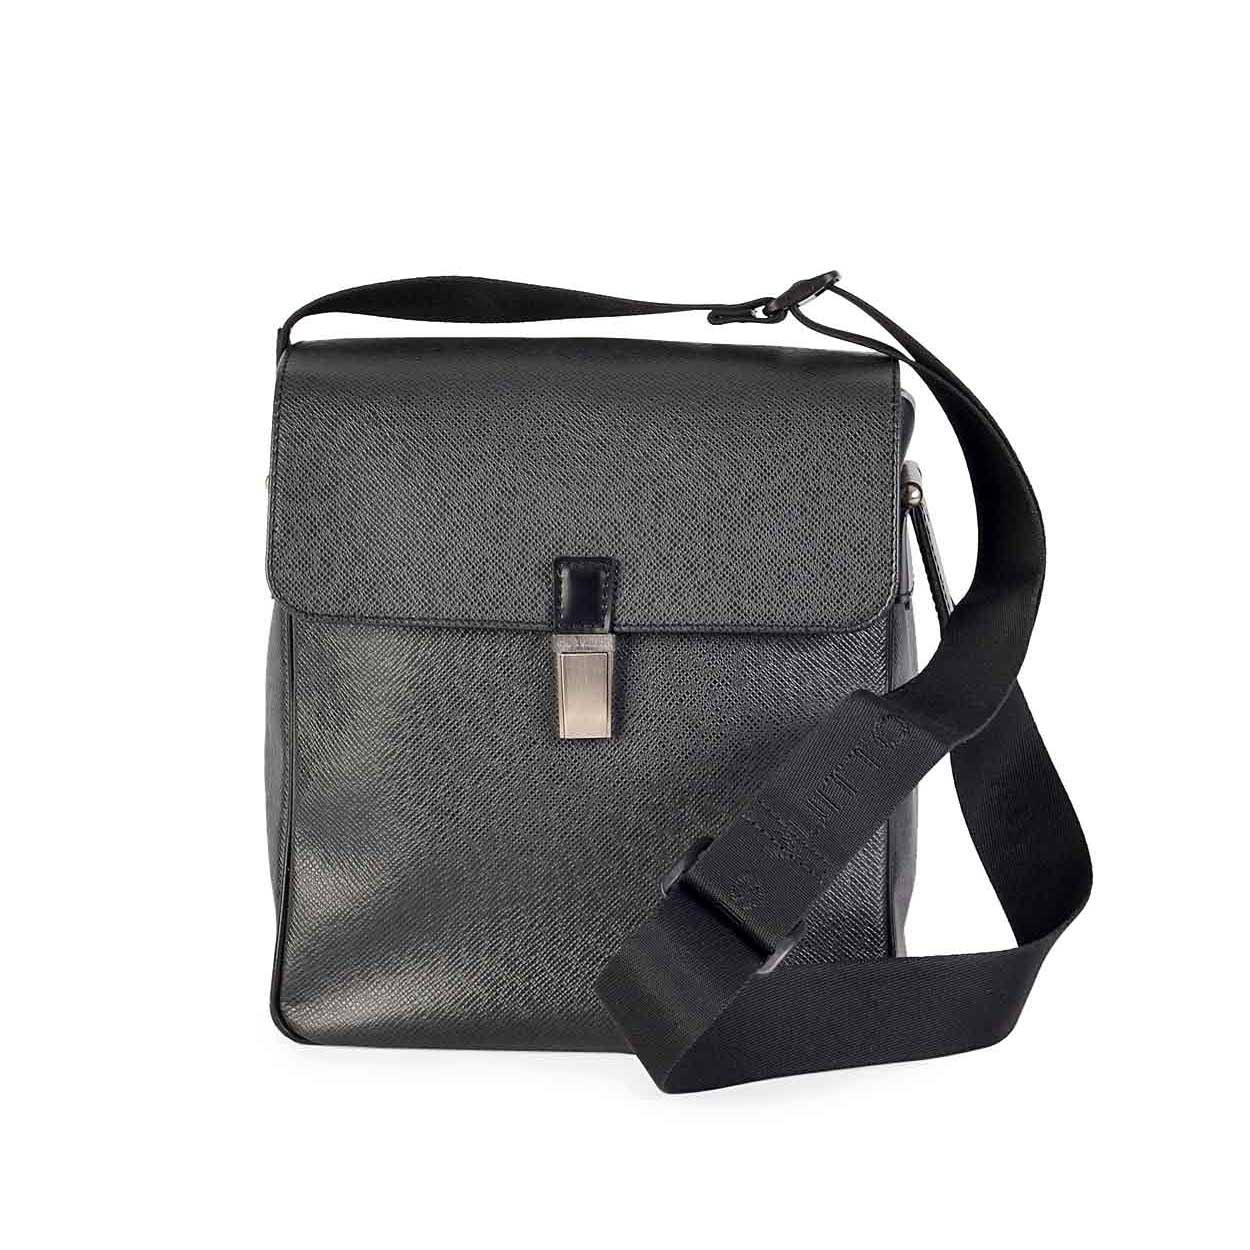 Louis Vuitton L Handbag 356253